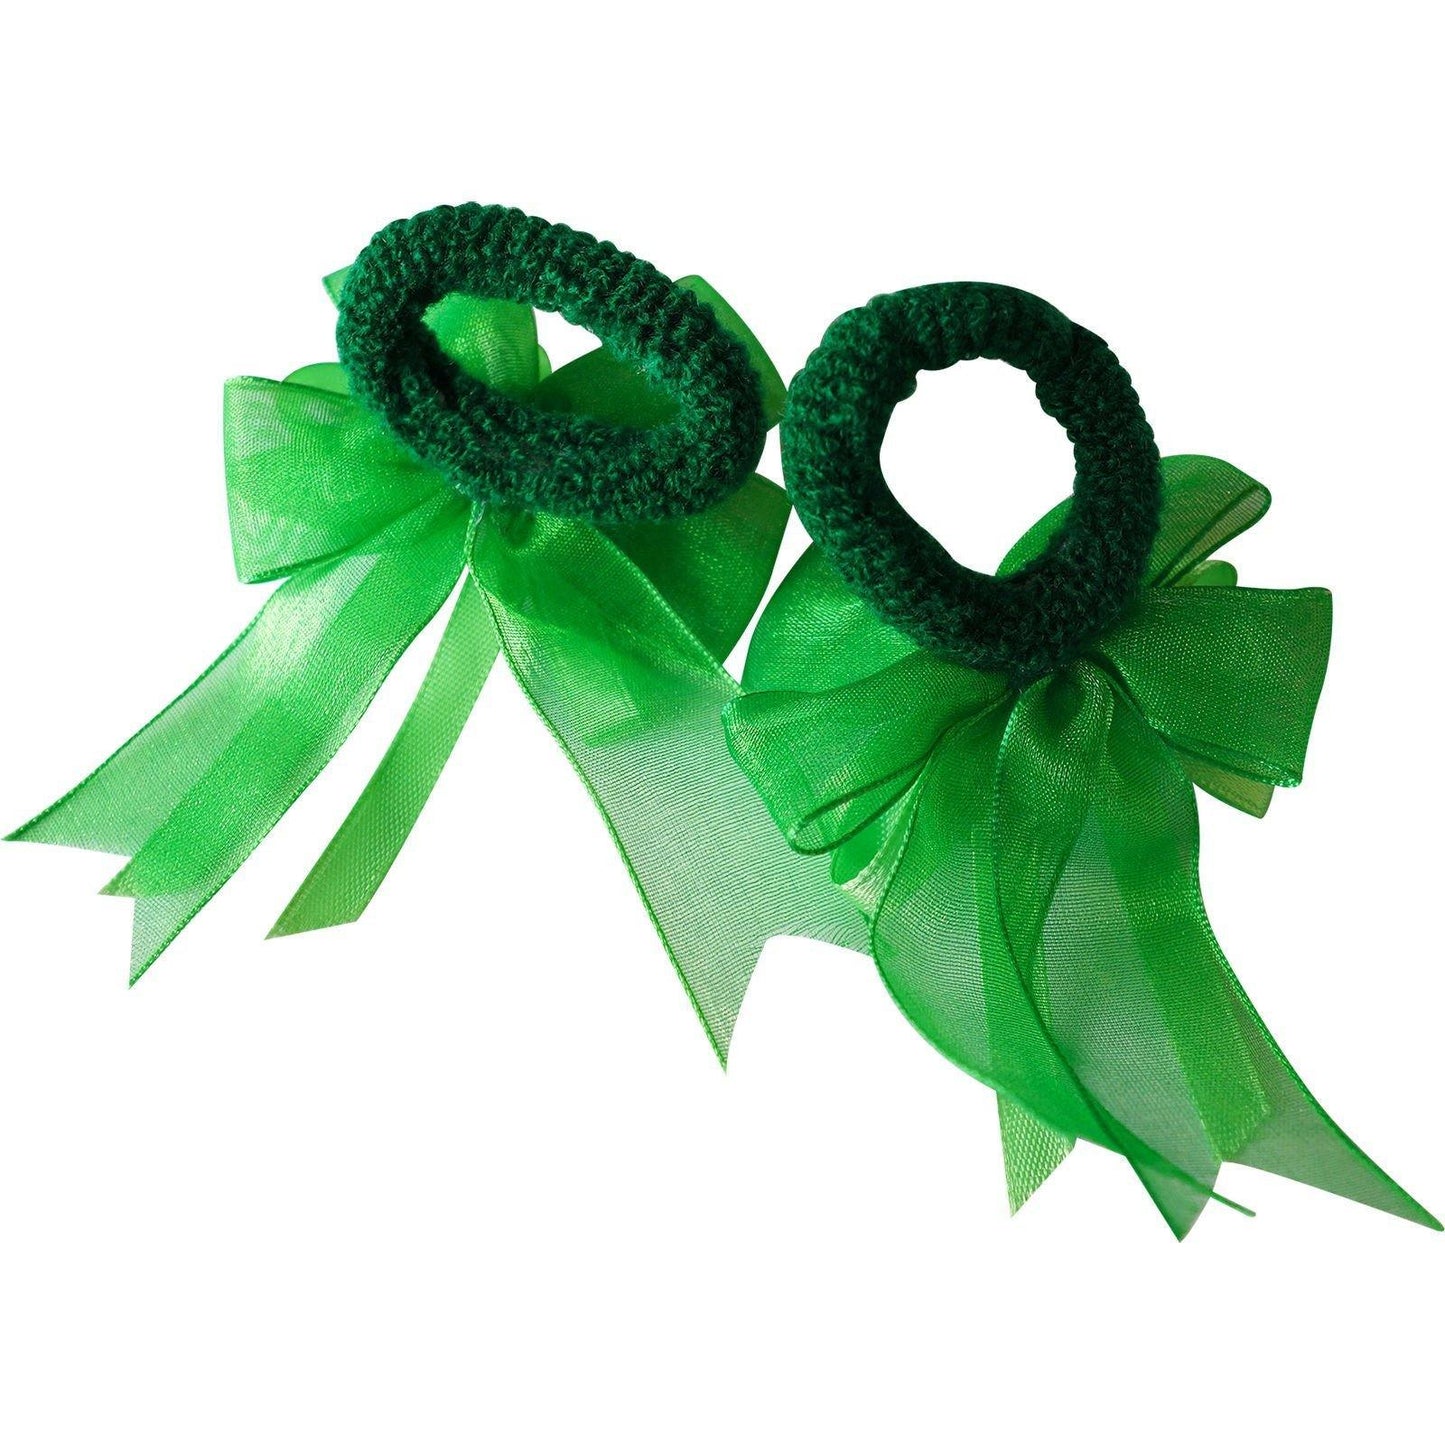 Pair of Small Green Hair Bow Ribbon Scrunchie Elastics Bobbles Girls Accessories